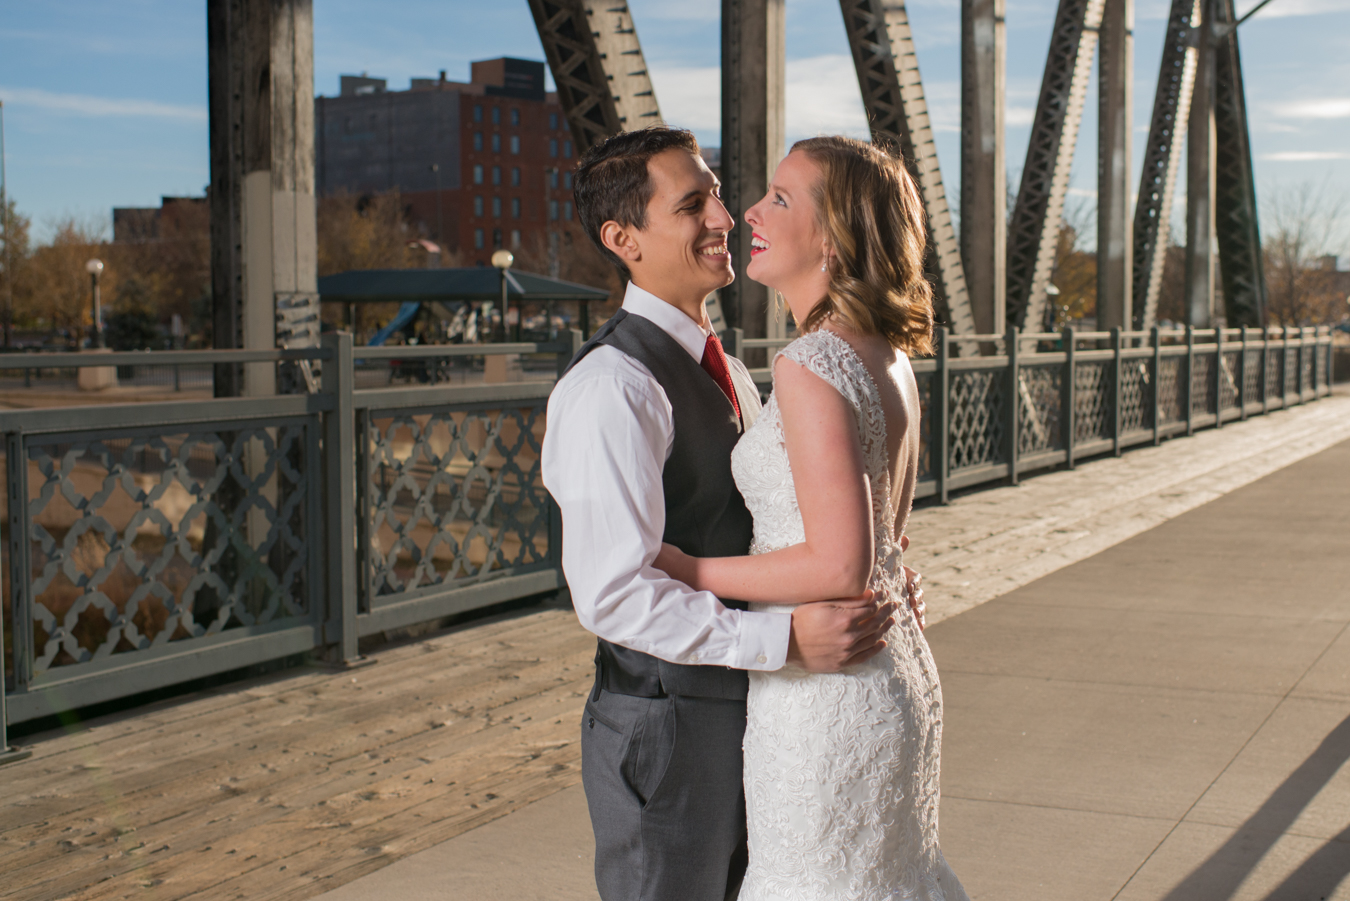 Downtown Denver | Post Wedding